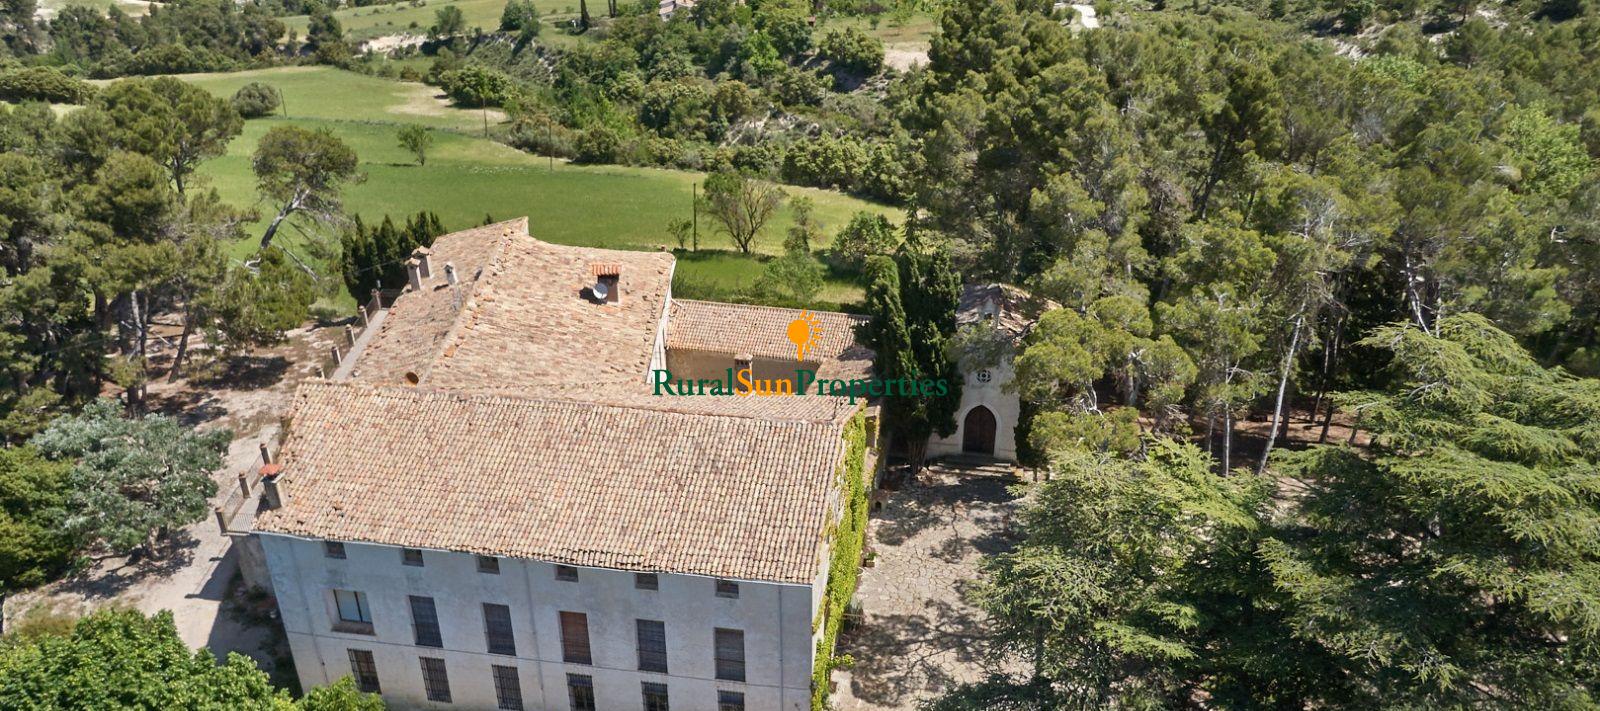 Manor estate for sale in Alicante 175 hectares